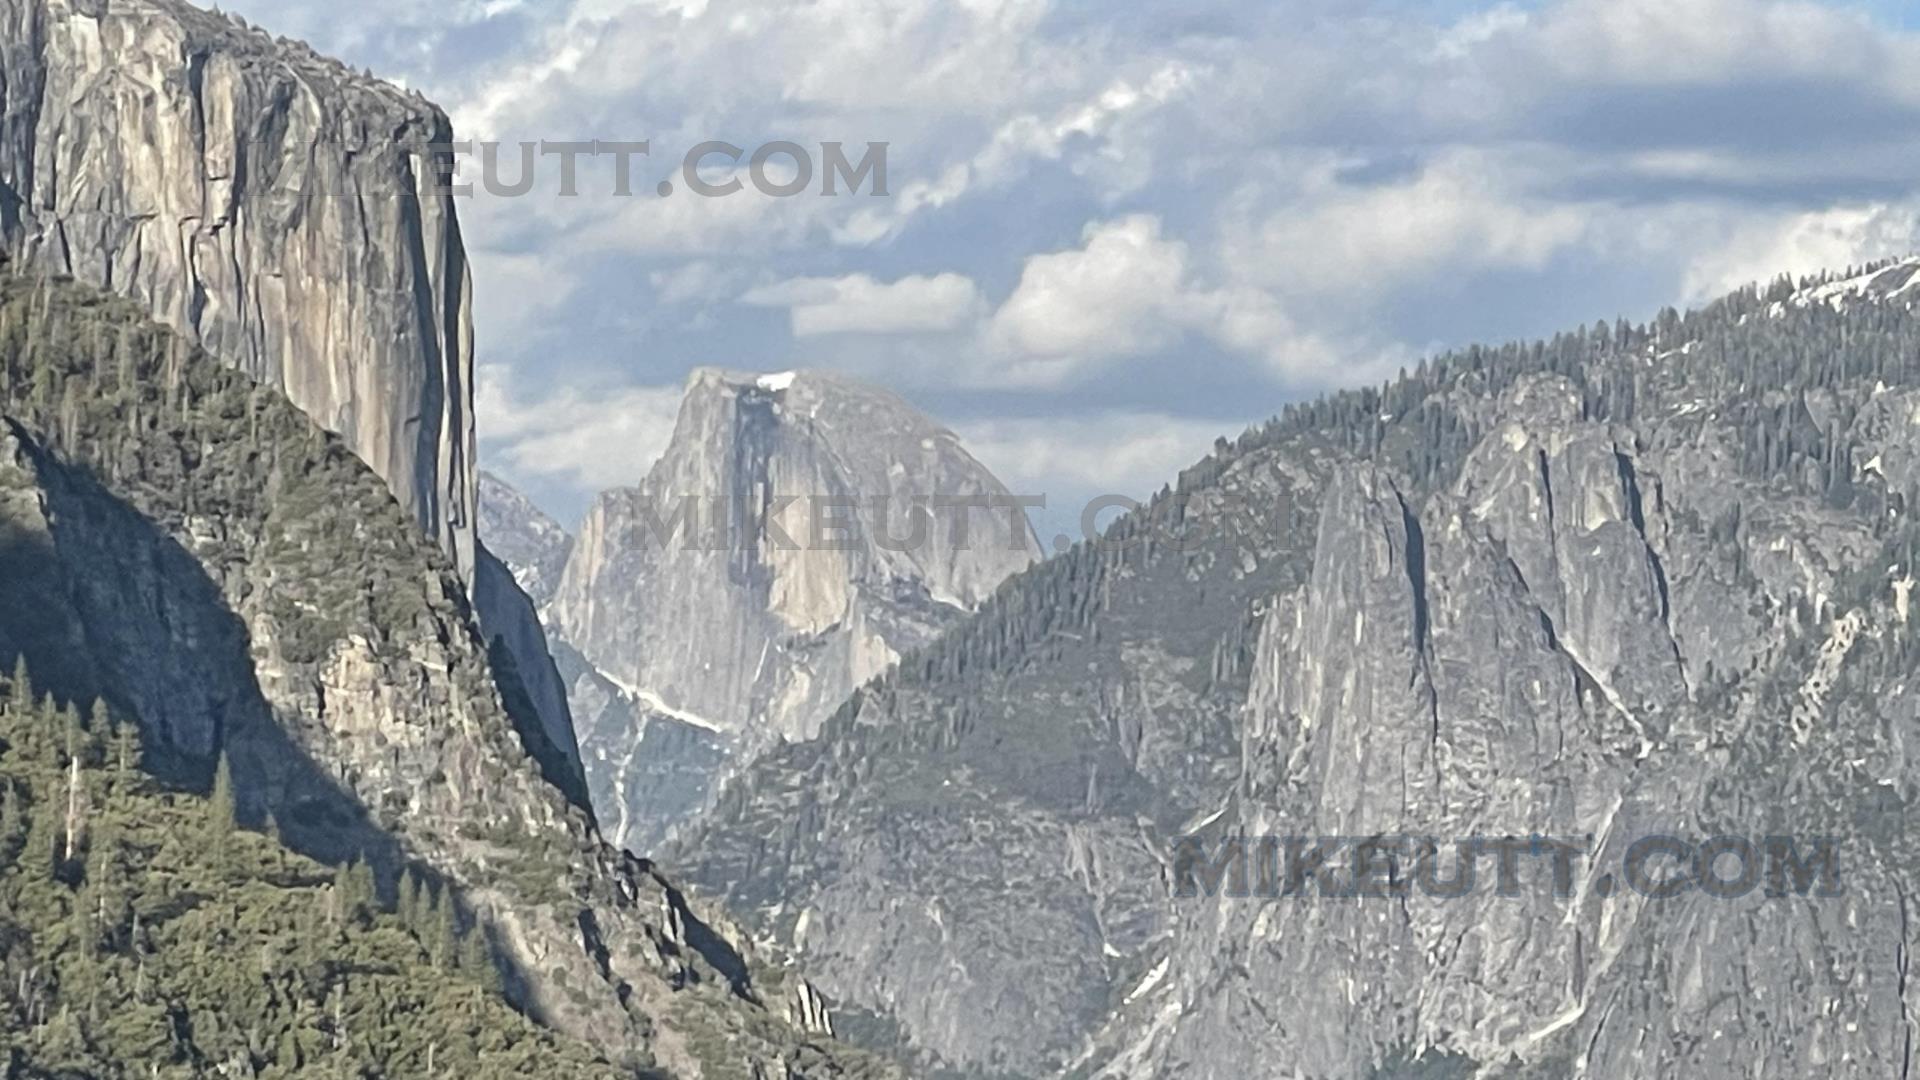 Yosemite Valley - Yosemite National Park, CA